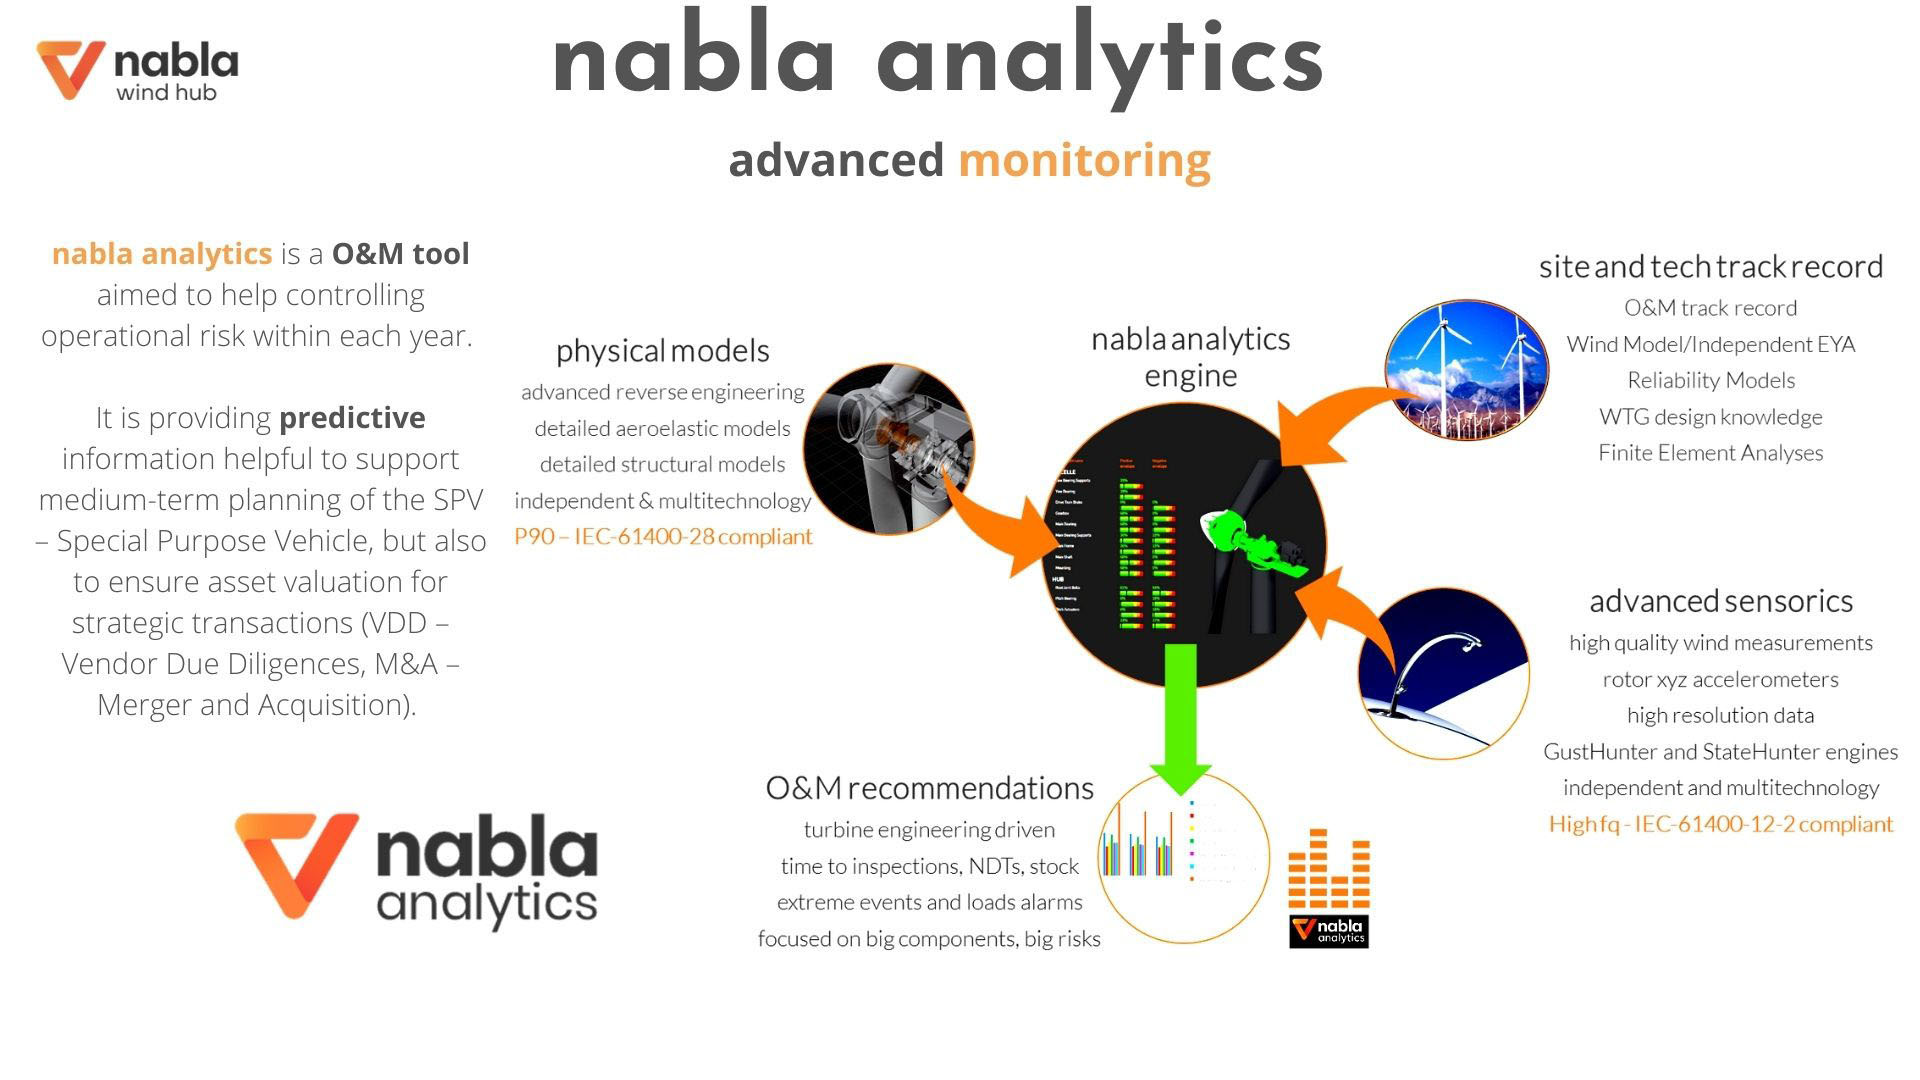 Nabla analytics, the latest wind farm monitoring tool